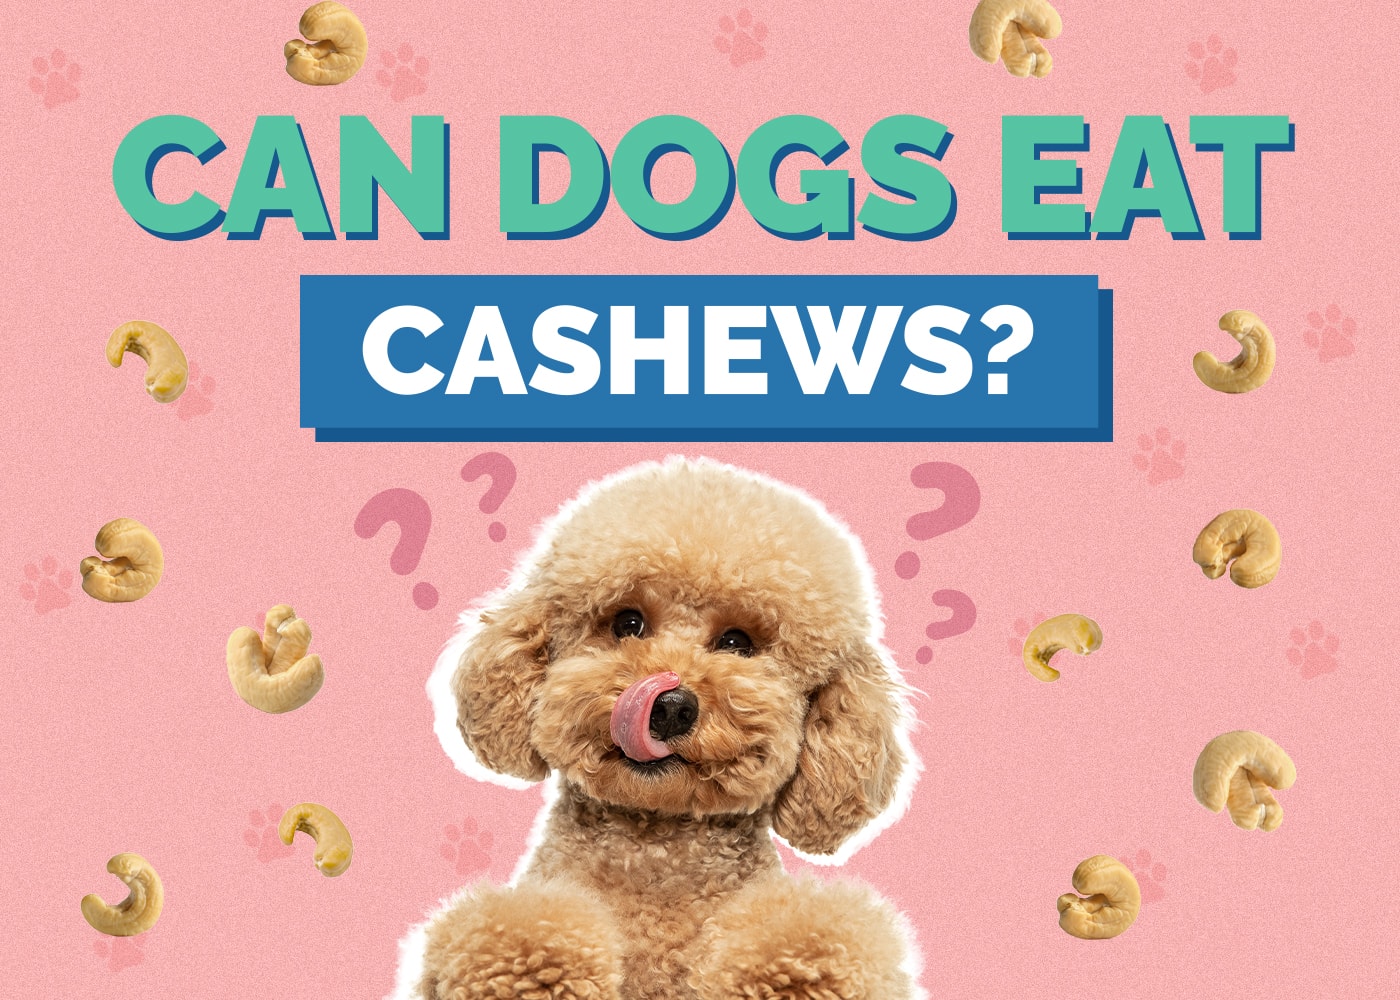 Can Dog Eat cashew